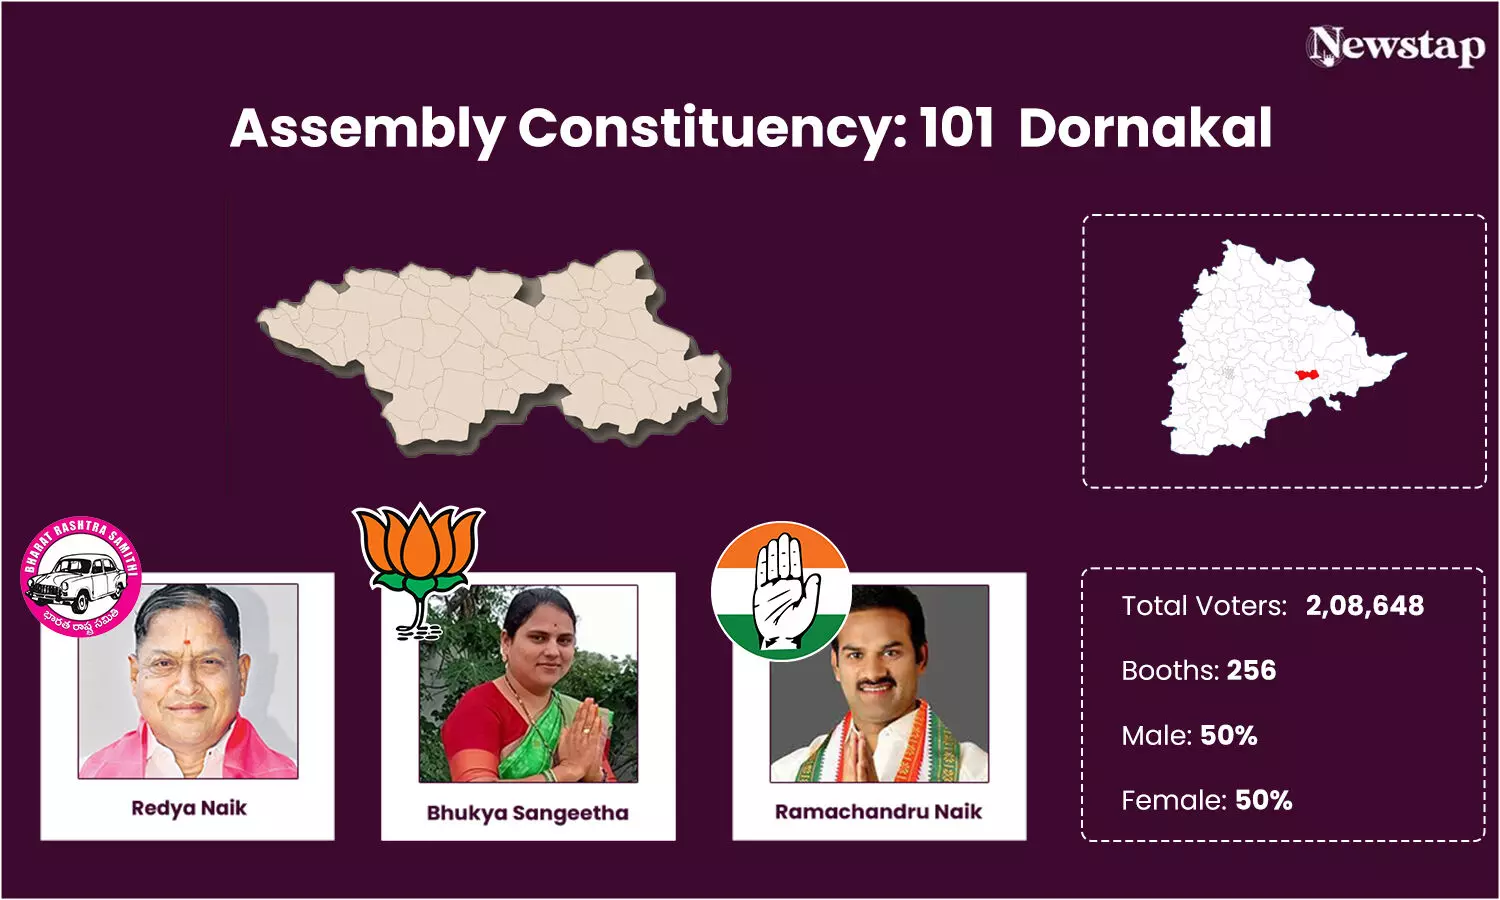 Redya Naik exudes confidence of his victory in Dornakal; Congress, BJP lack leadership